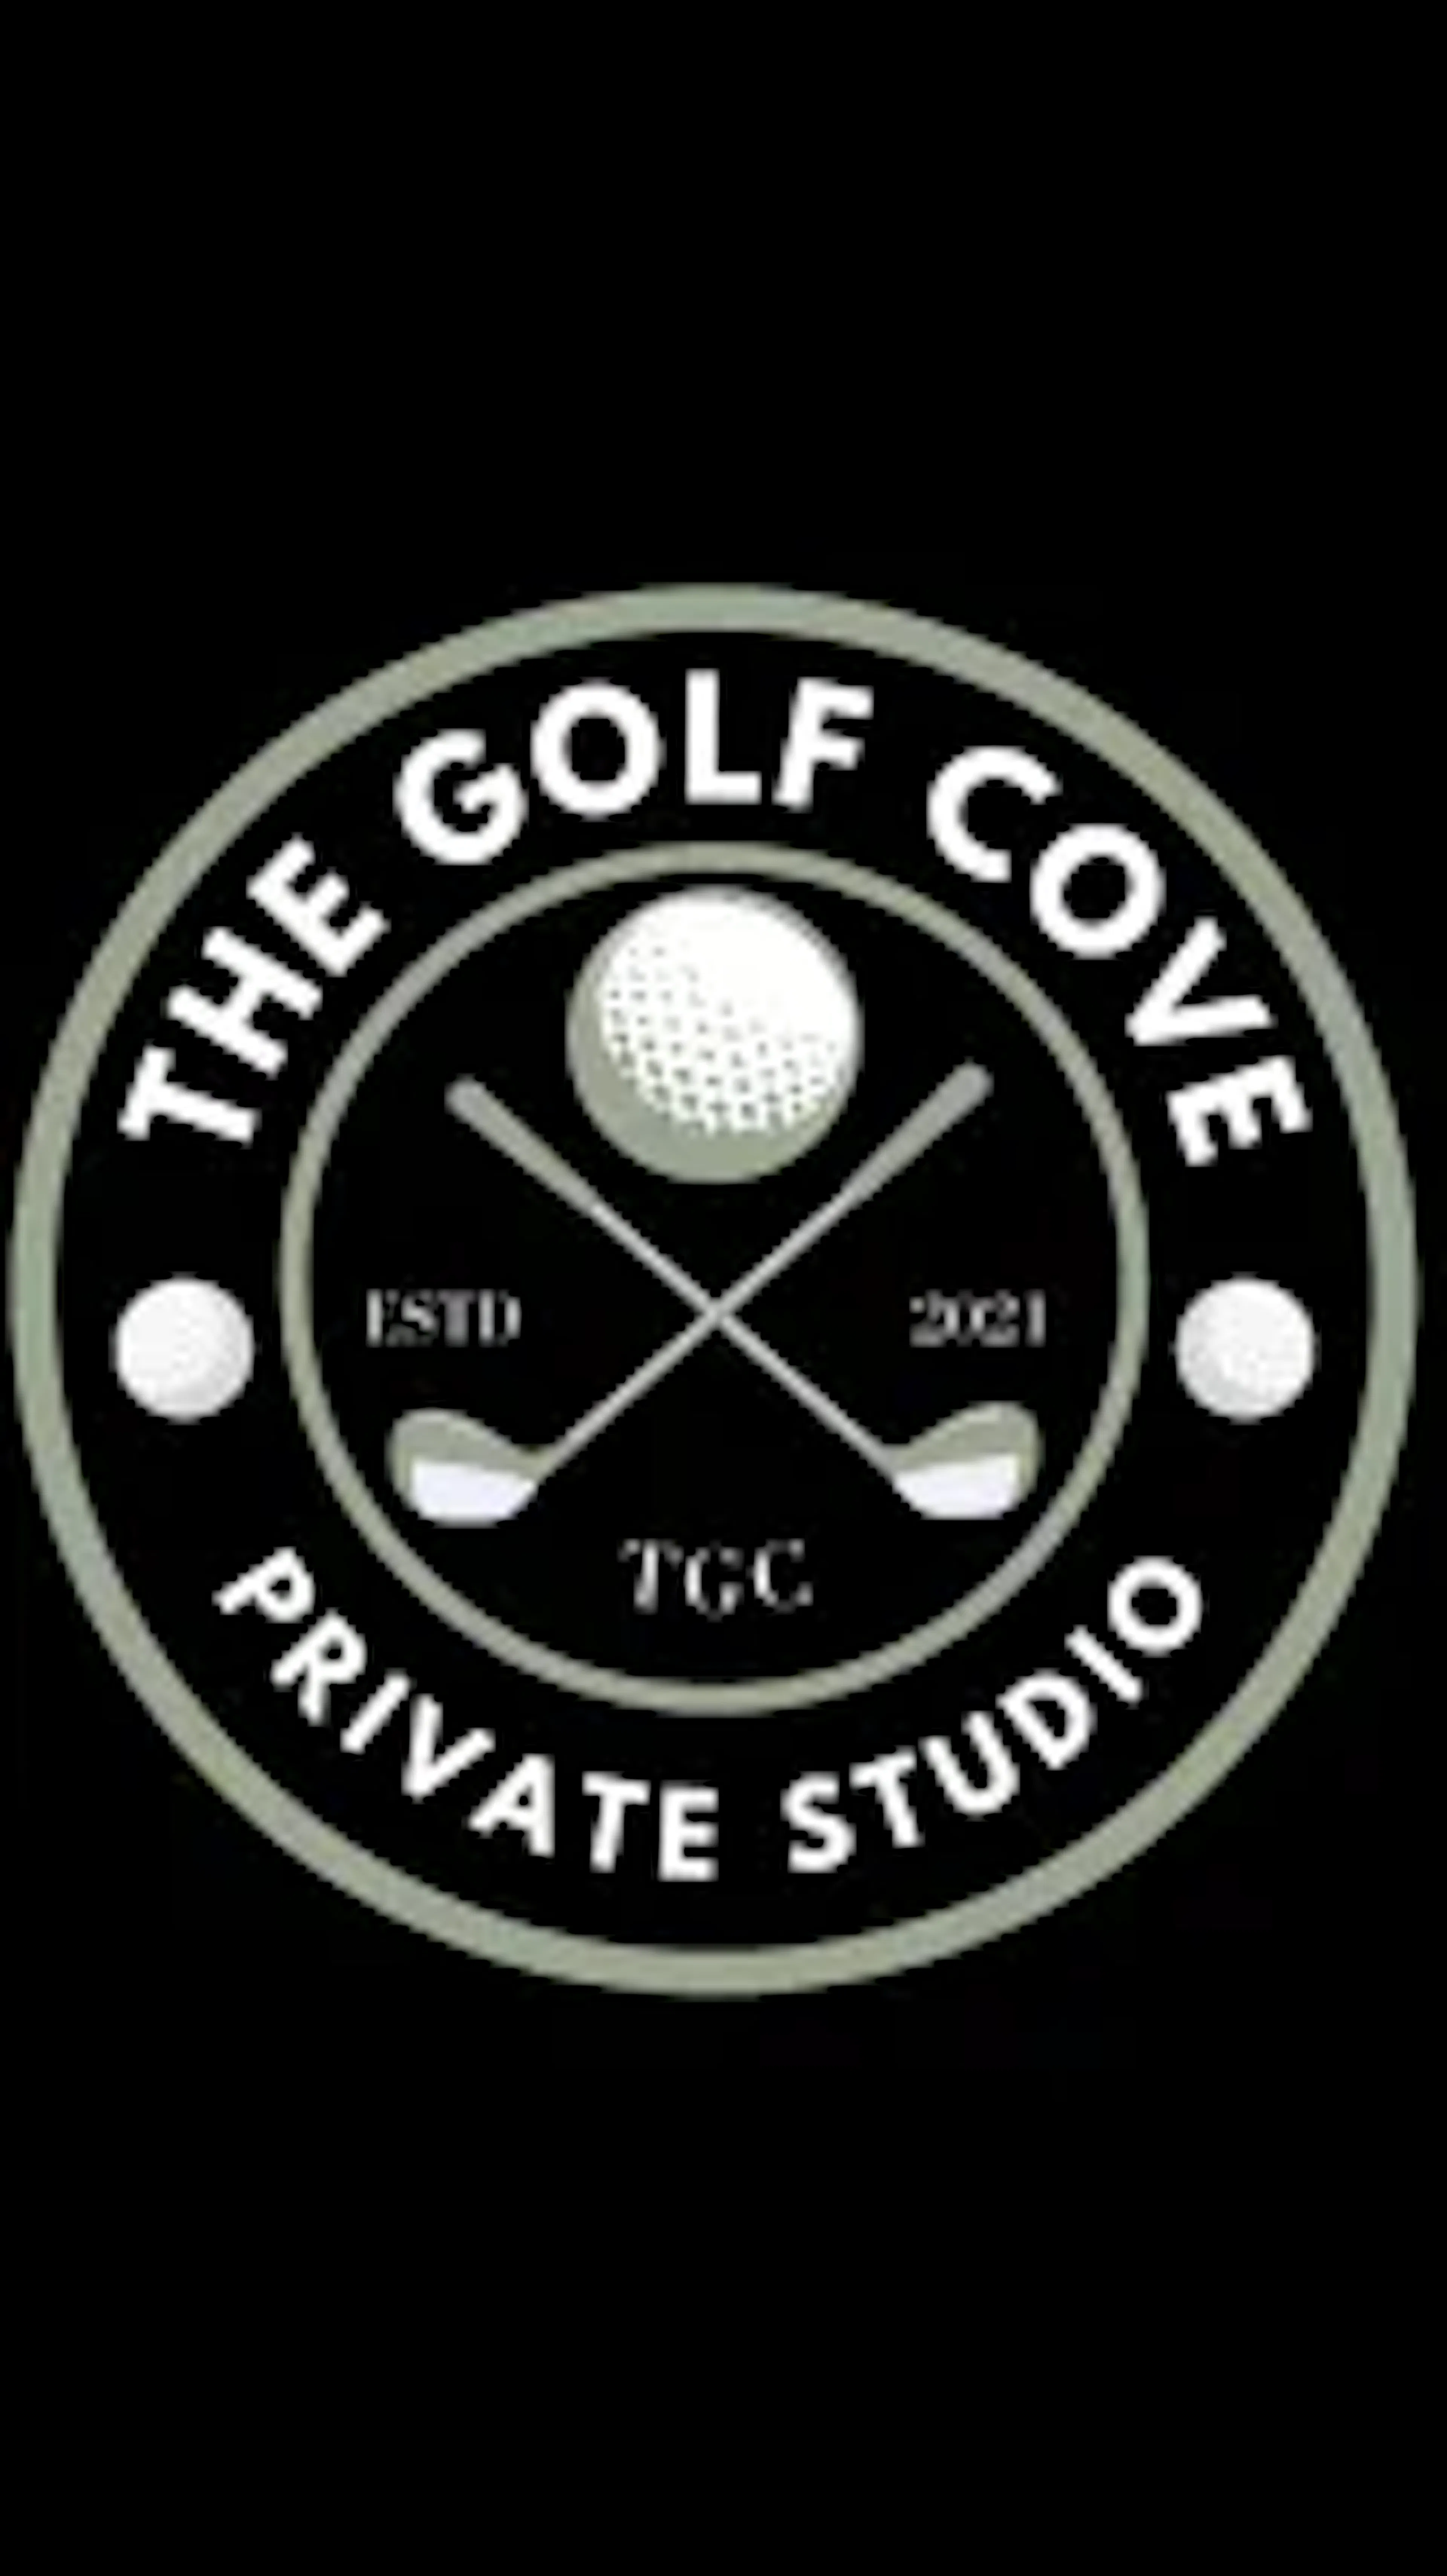 the golf cove